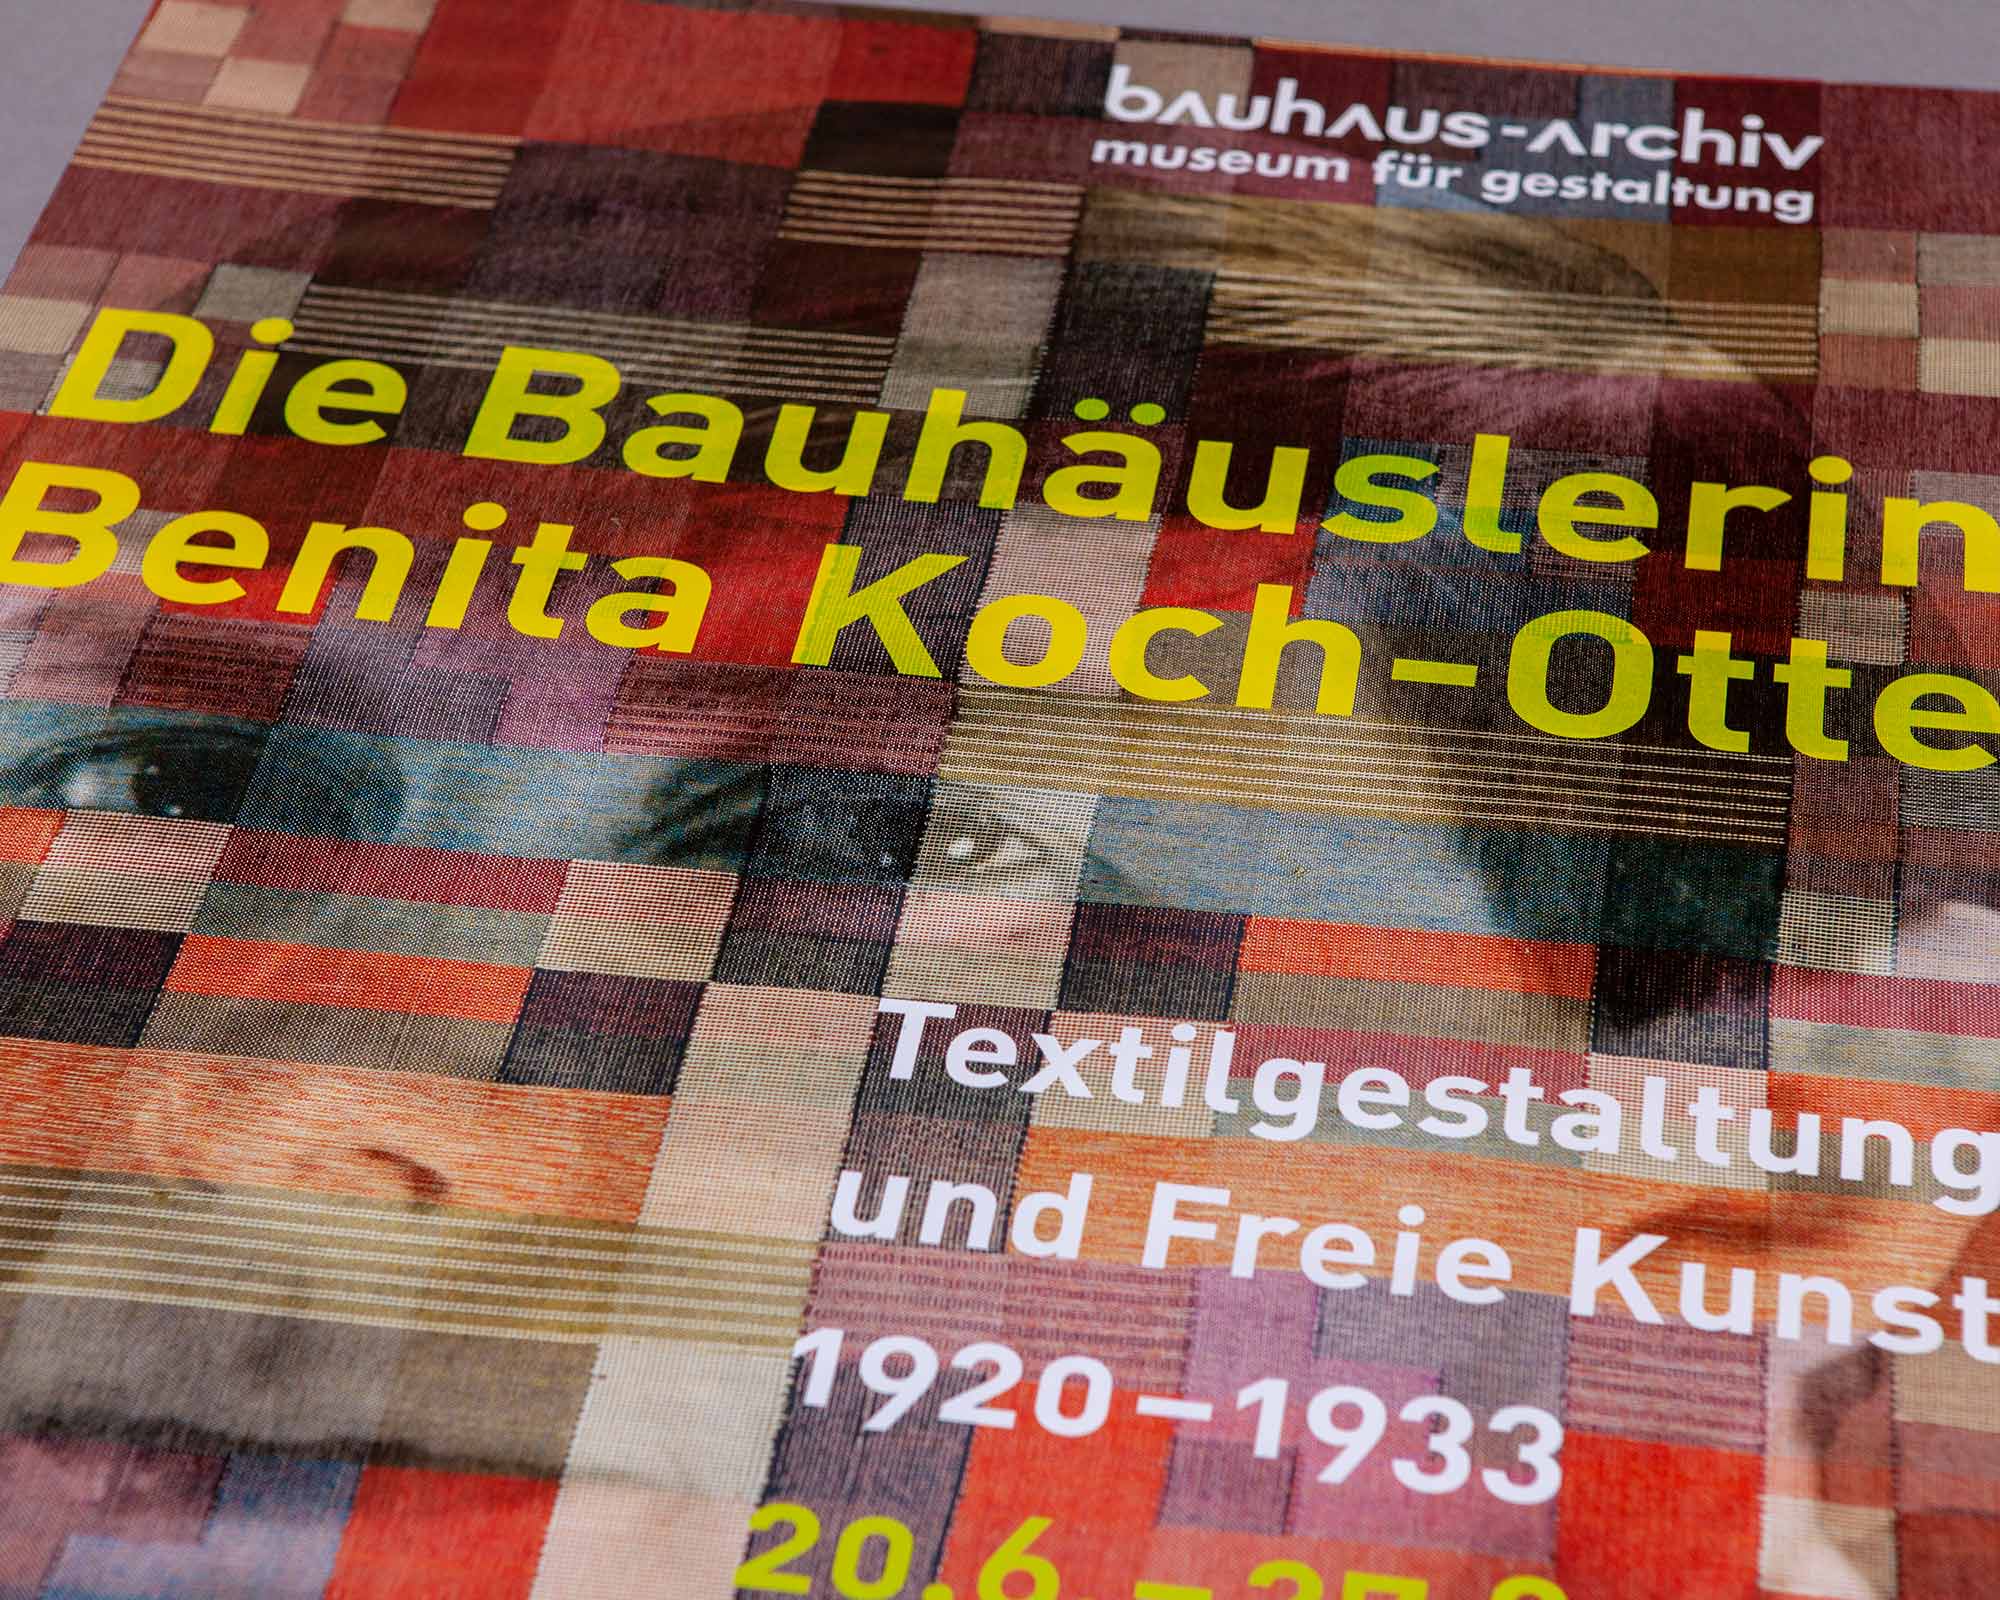 Bauhaus Archiv Plakat Benita Koch-Otte